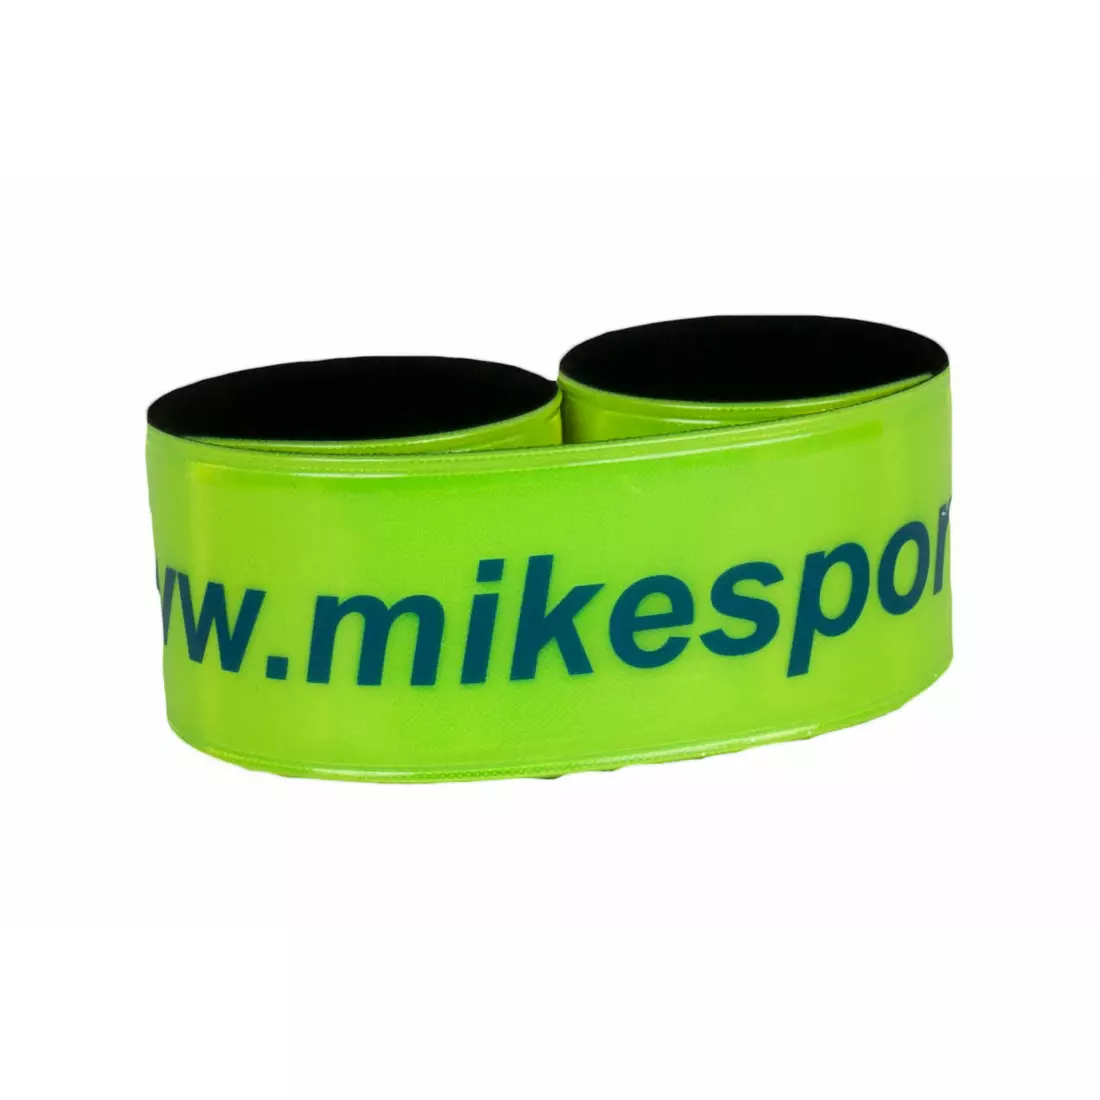 Mikesport - reflective armband. logo - fluorine